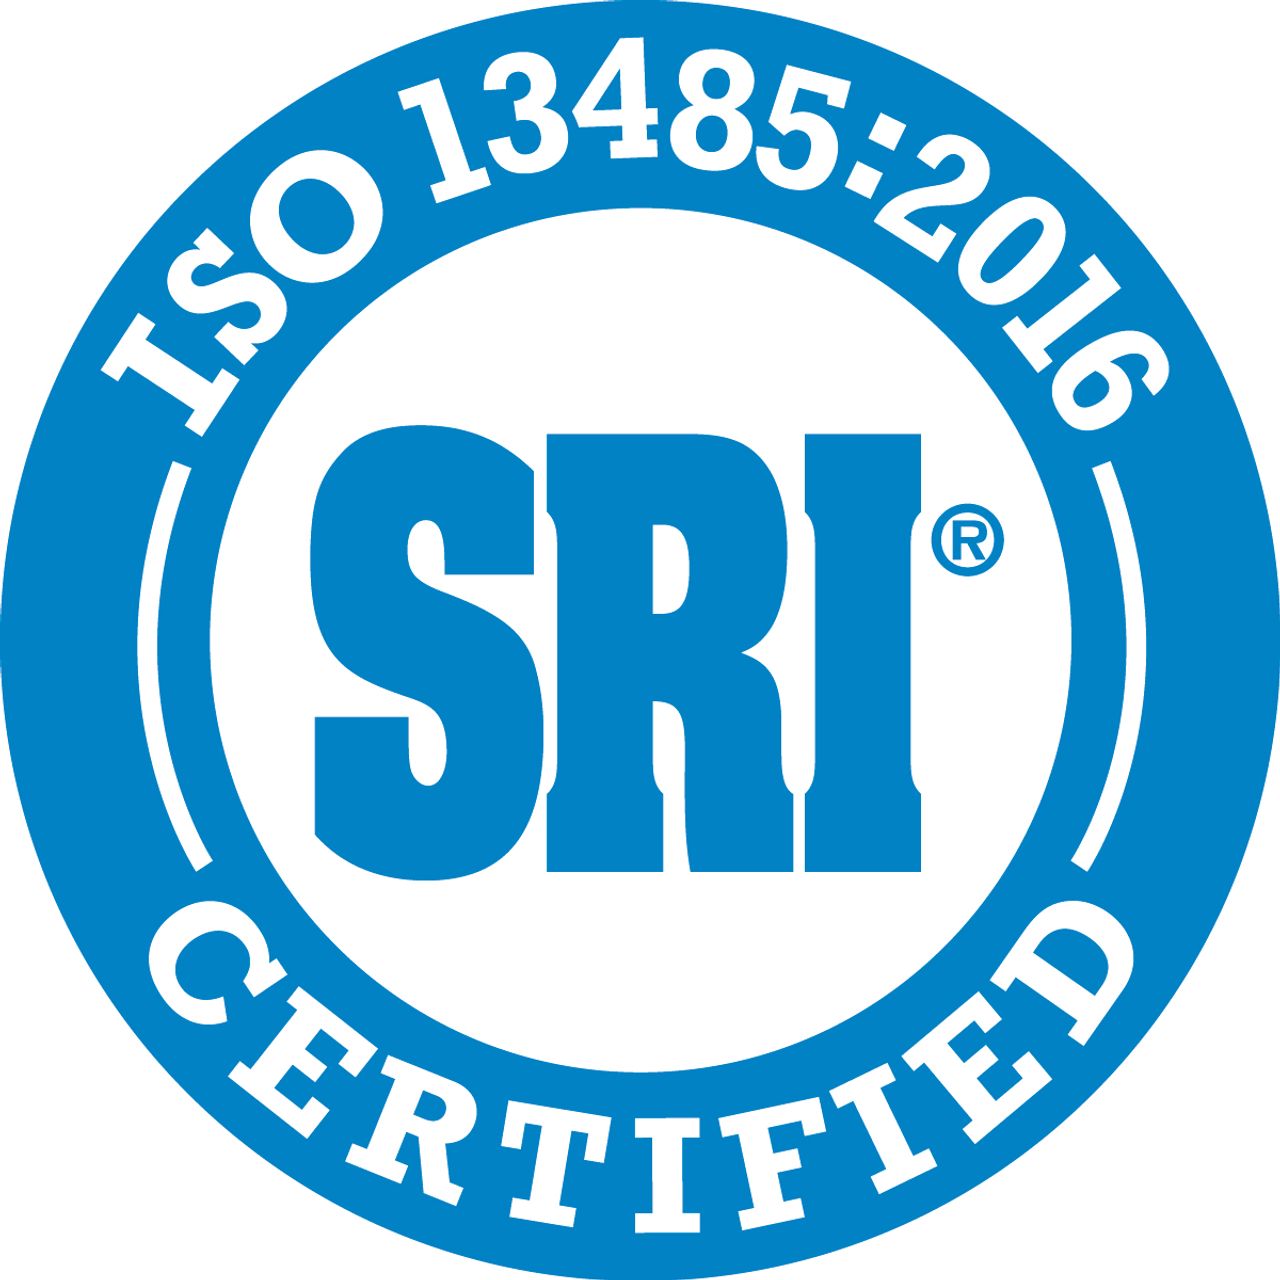 AS9100 Certified